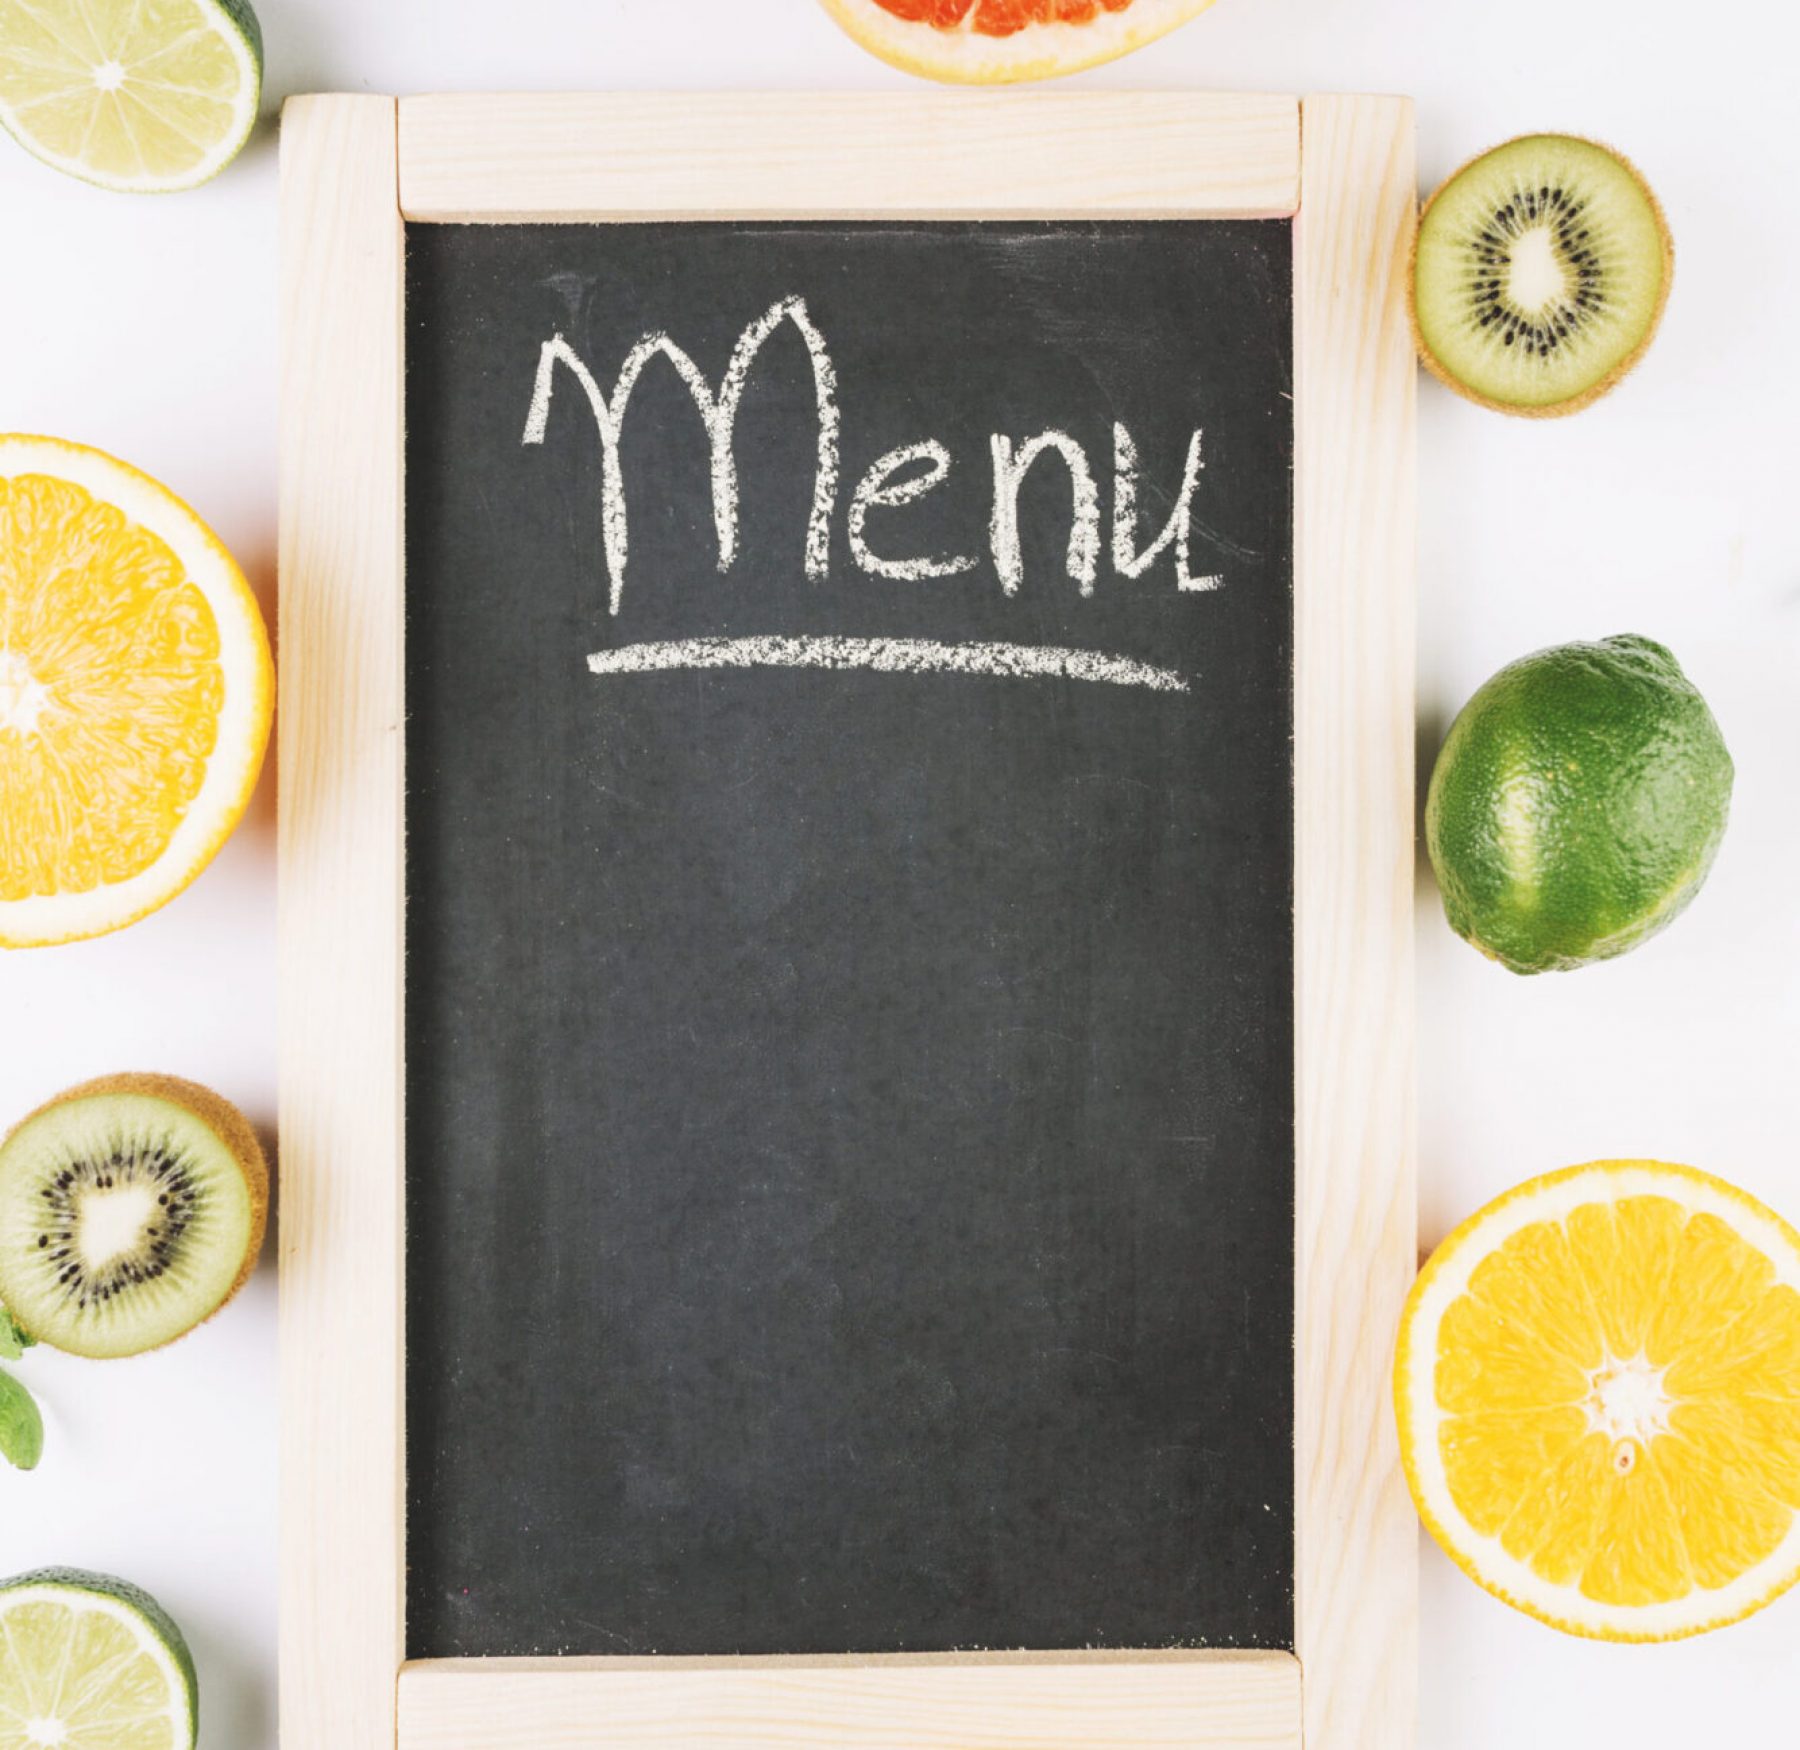 fruits-around-blackboard-with-menu-writing